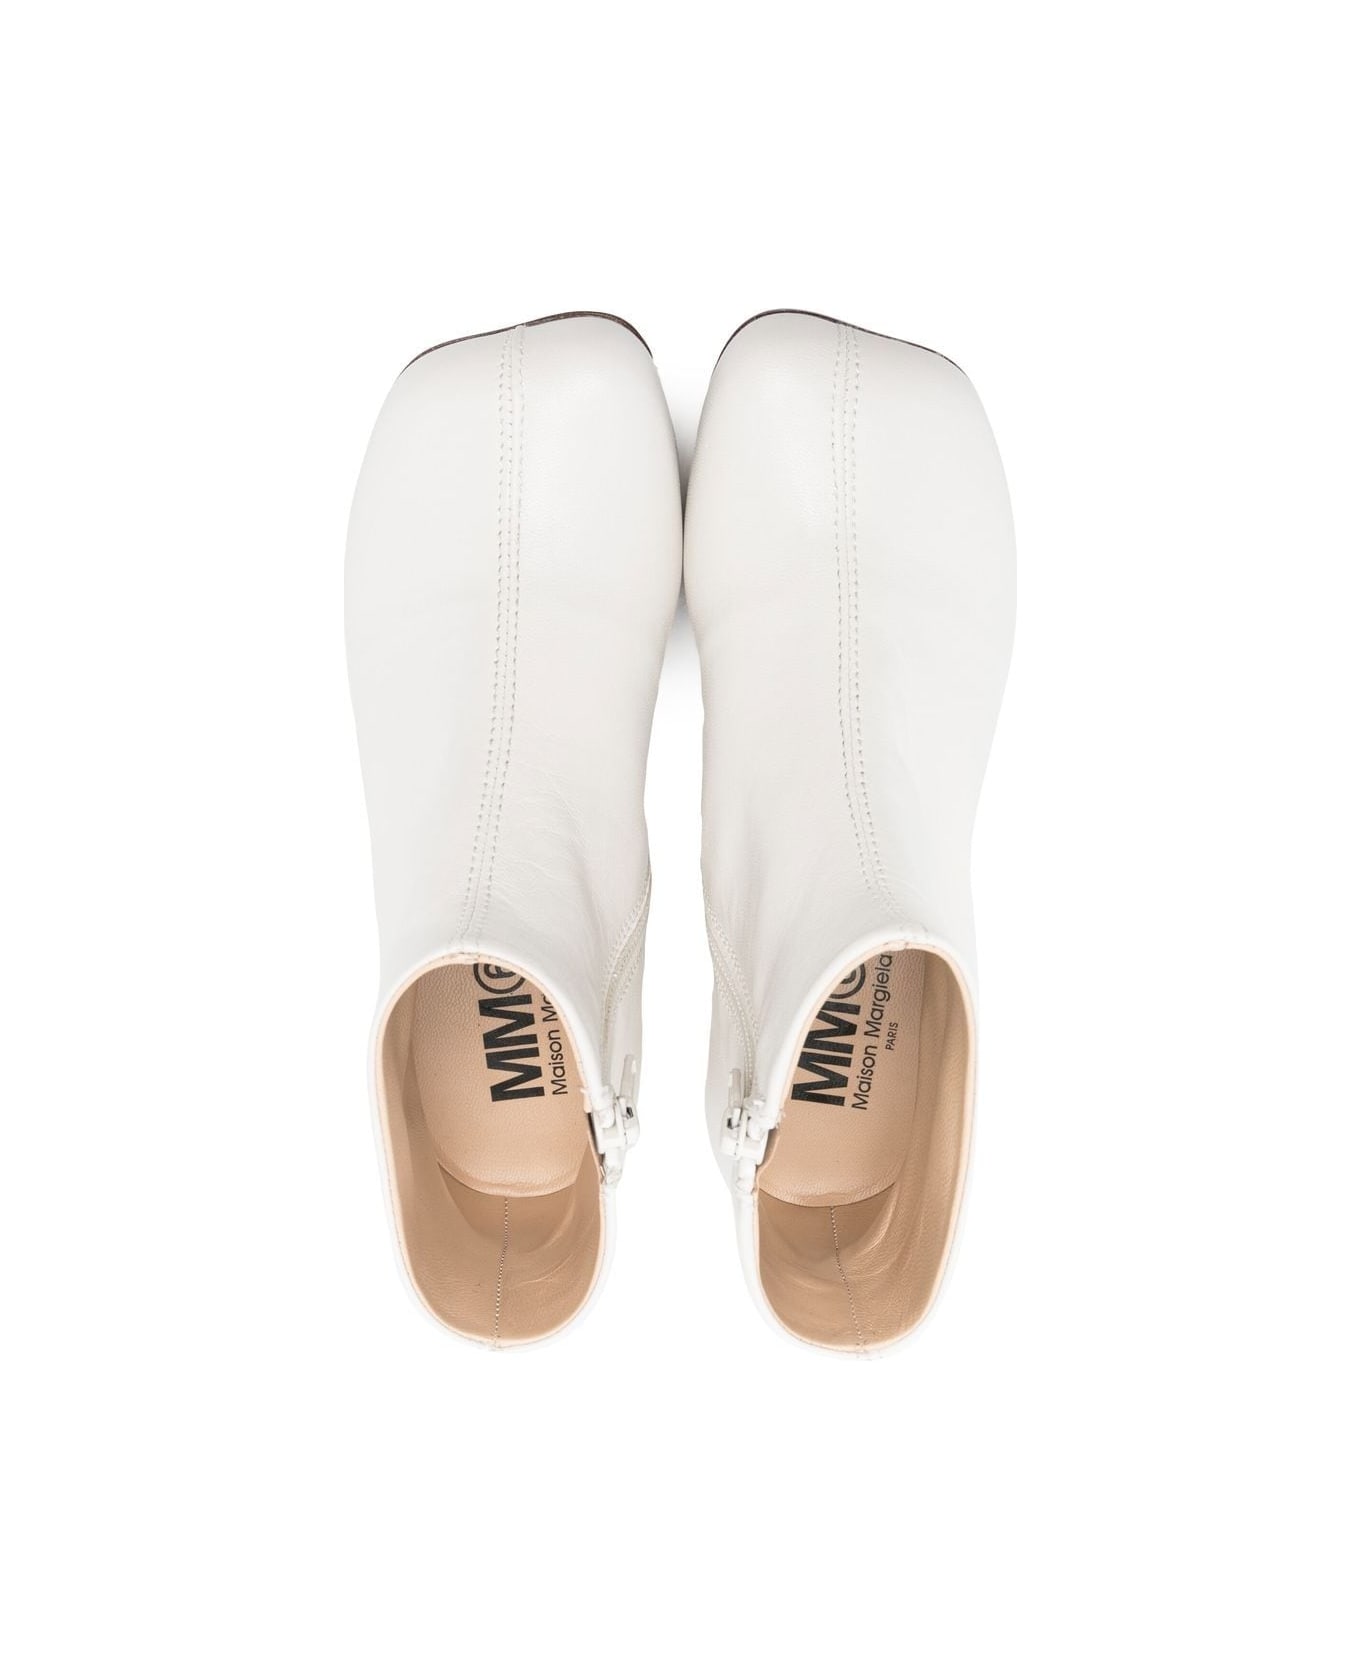 MM6 Maison Margiela White Ankle Boots - White